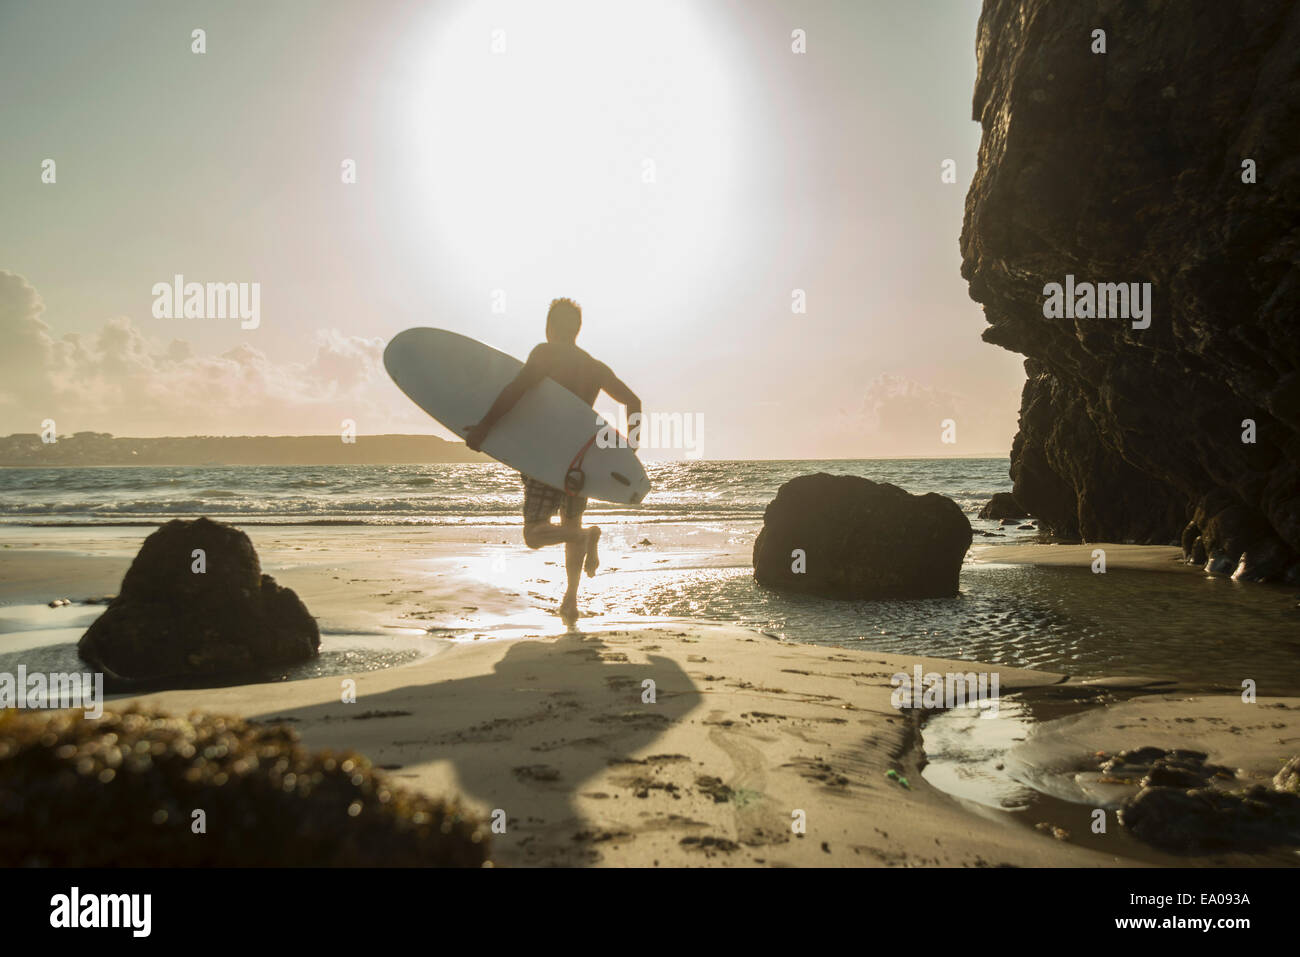 Mature man running towards sea, holding surf board Stock Photo